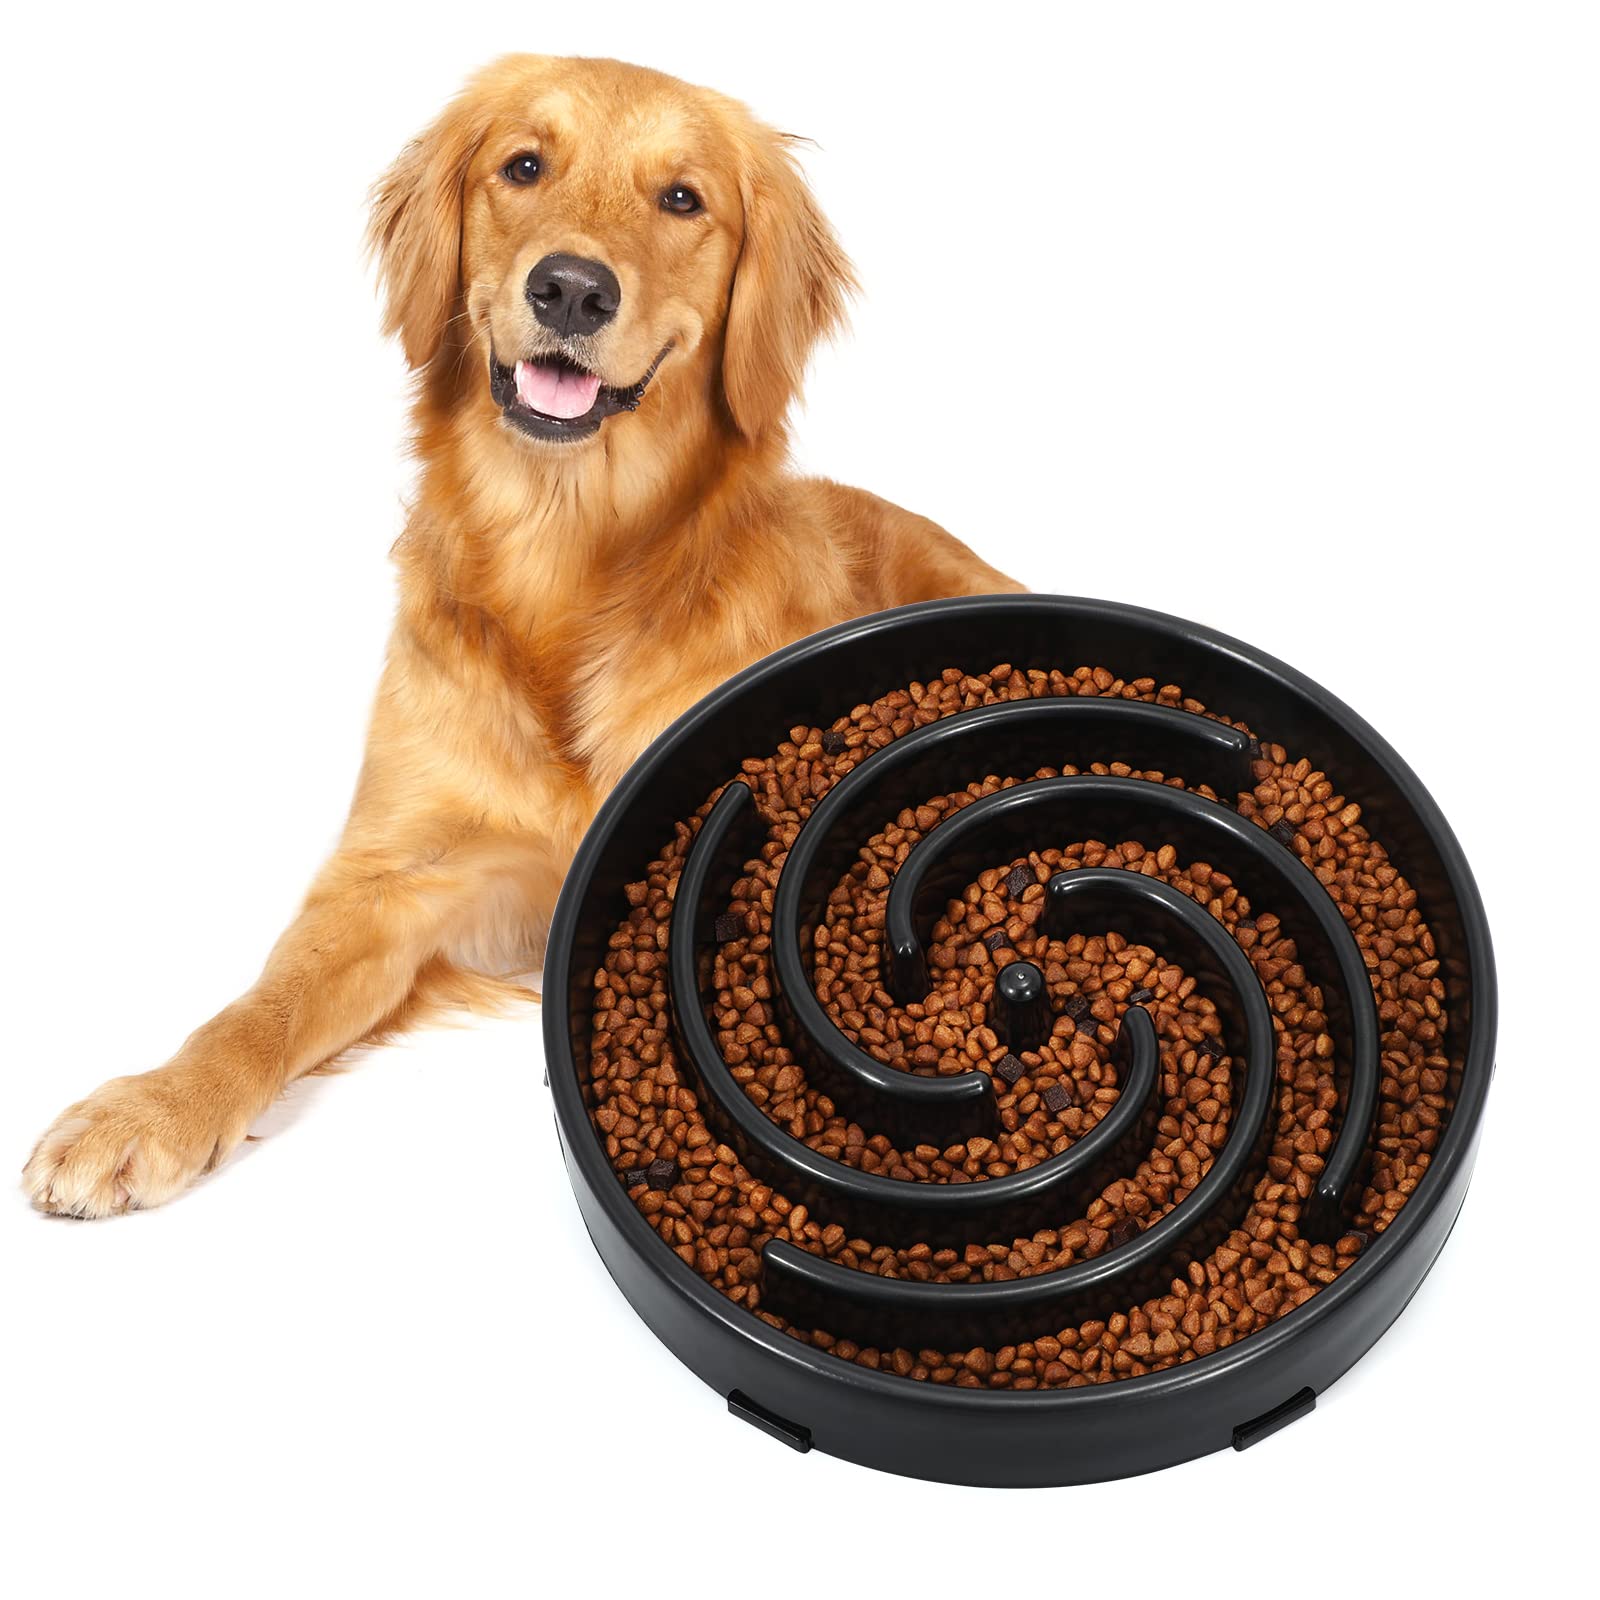 PETDURO Slow Feeder Dog Bowls Large Breed Heavy Duty Non-Slip Maze Puz